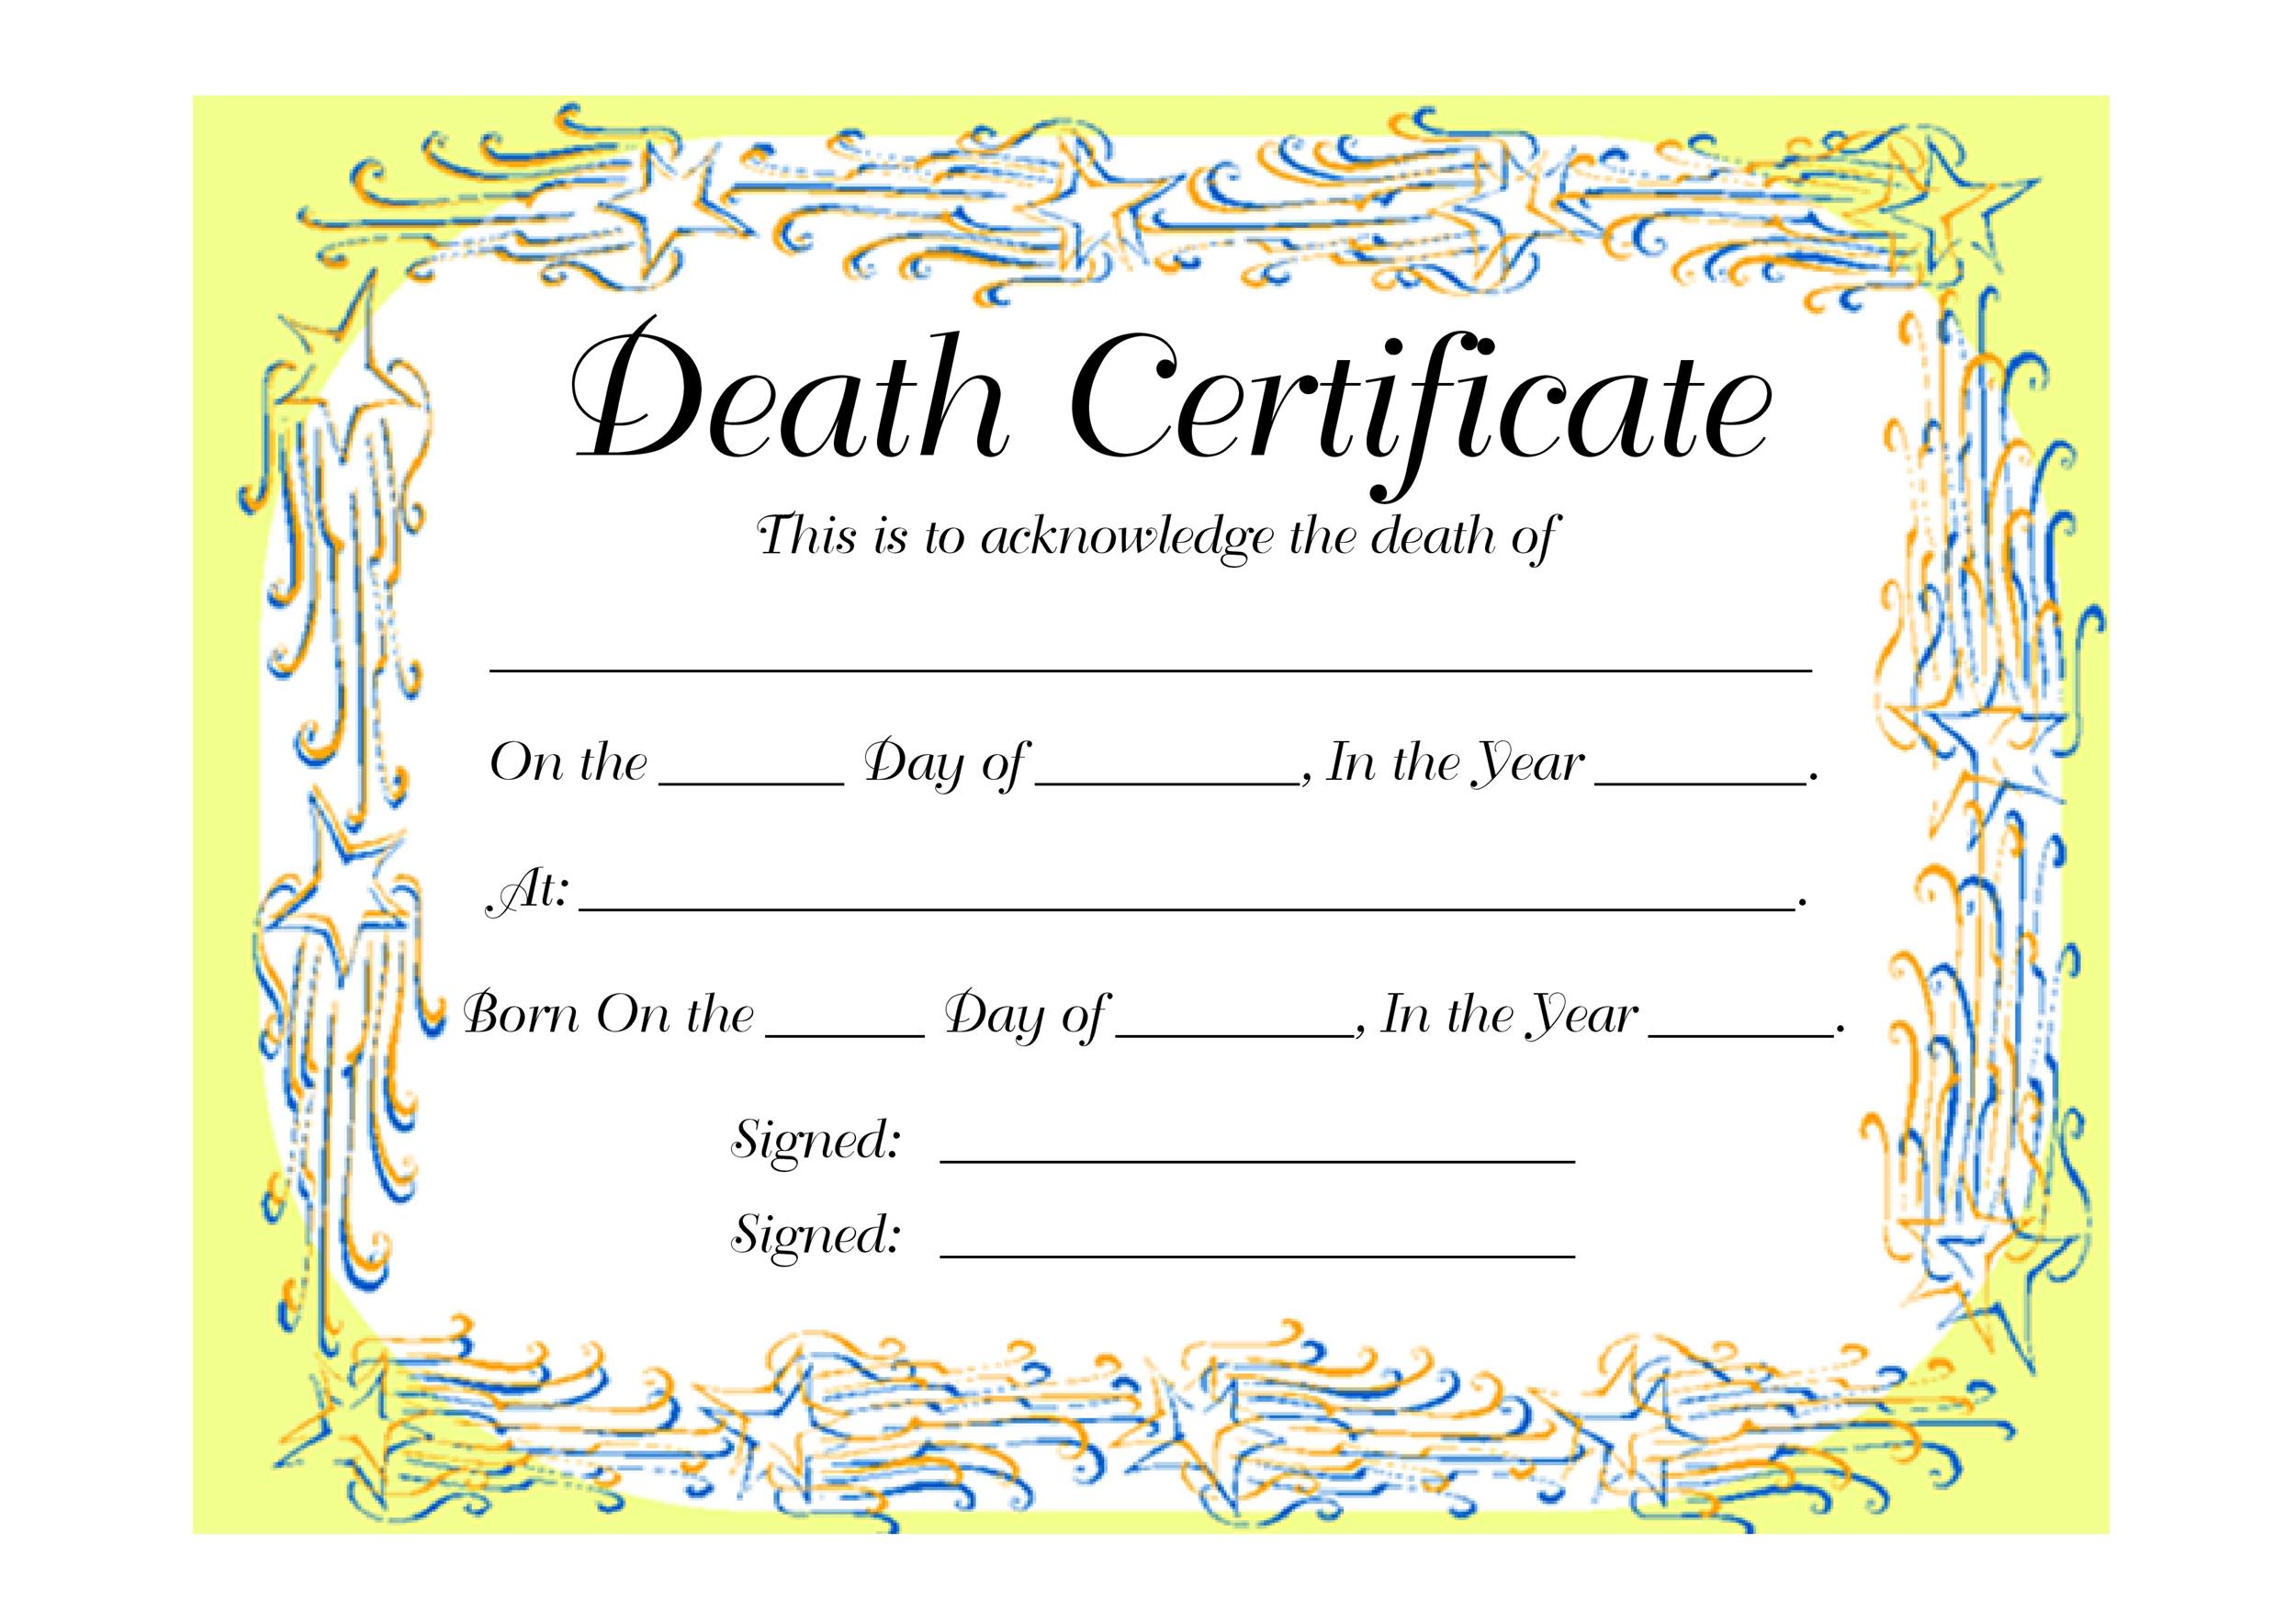 37 Blank Death Certificate Templates 100% FREE ᐅ TemplateLab